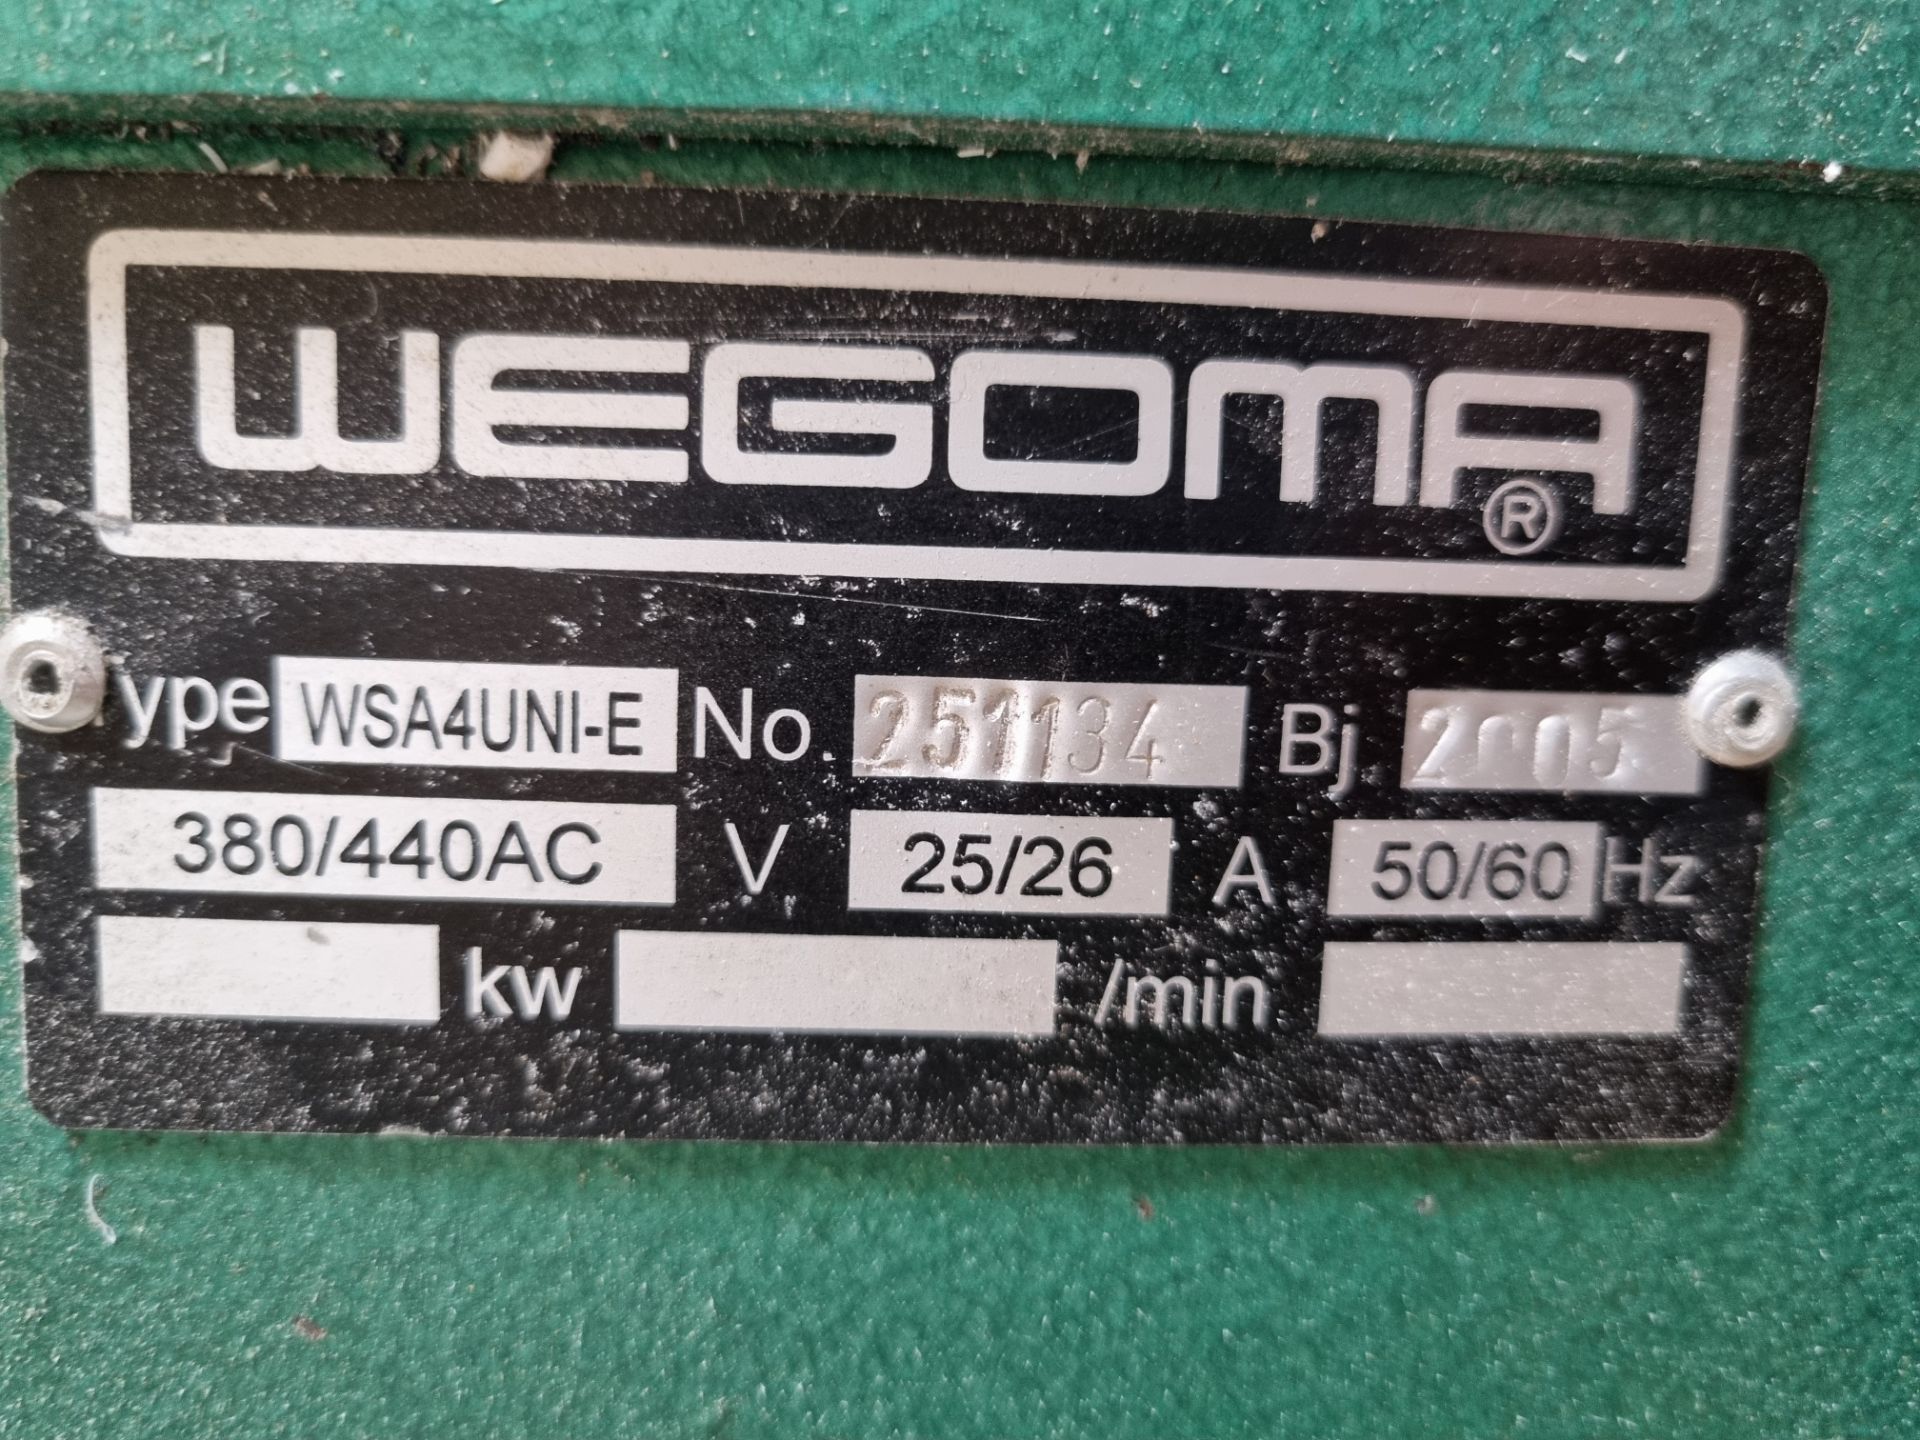 Wegoma 4 head welder - Image 8 of 8